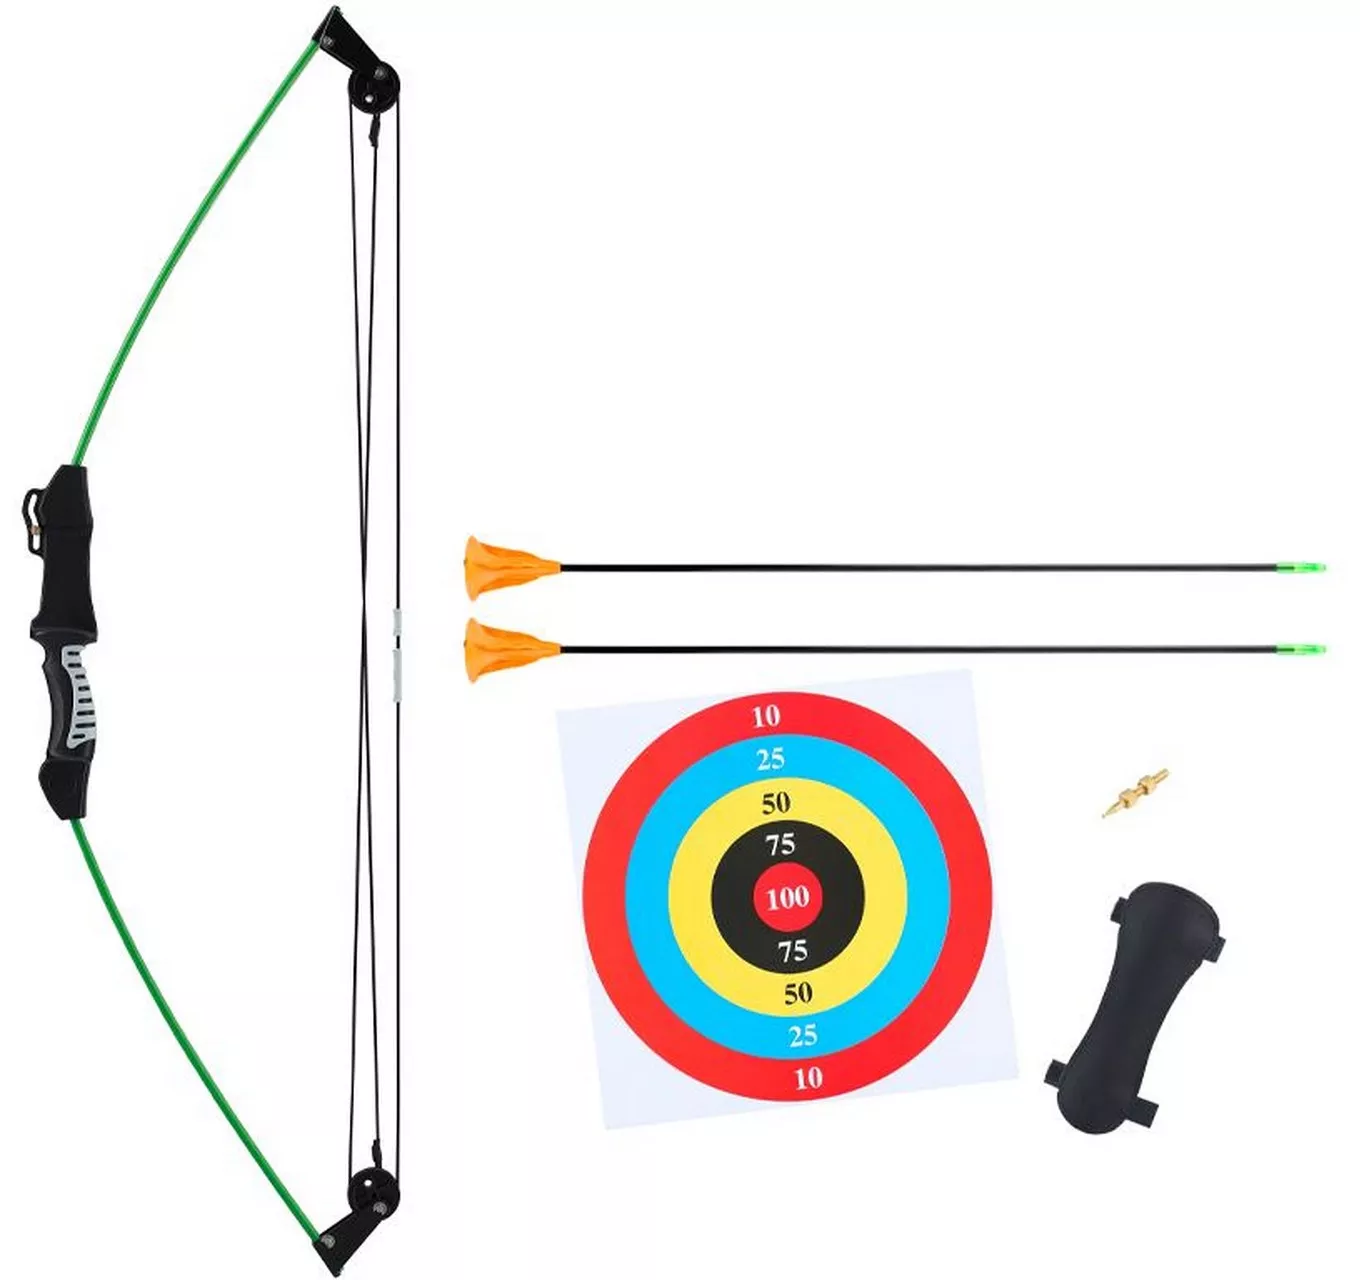 NXG Youth Cadet 4 Archery Kit